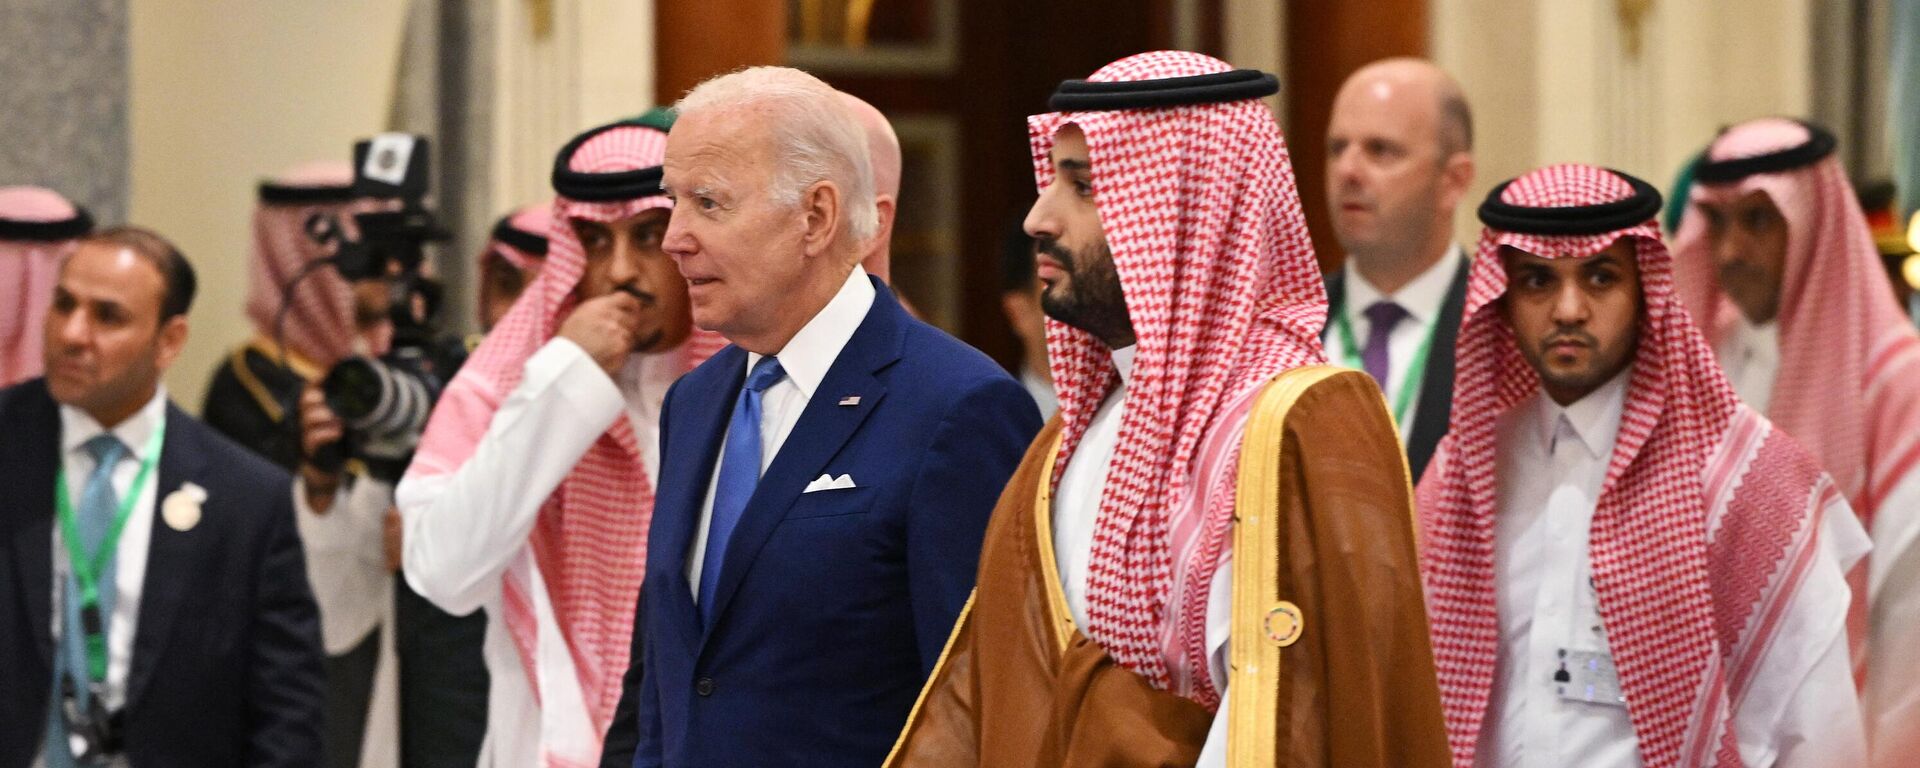 Joe Biden, presidente dos EUA (ao centro, de terno), e Mohammed bin Salman, príncipe herdeiro da Arábia Saudita (ao centro, ao lado de Biden), chegam para foto conjunta durante a Cúpula de Segurança e Desenvolvimento de Jeddah, em hotel na cidade costeira de Jeddah, na Arábia Saudita, em 16 de julho de 2022 - Sputnik Brasil, 1920, 13.11.2022